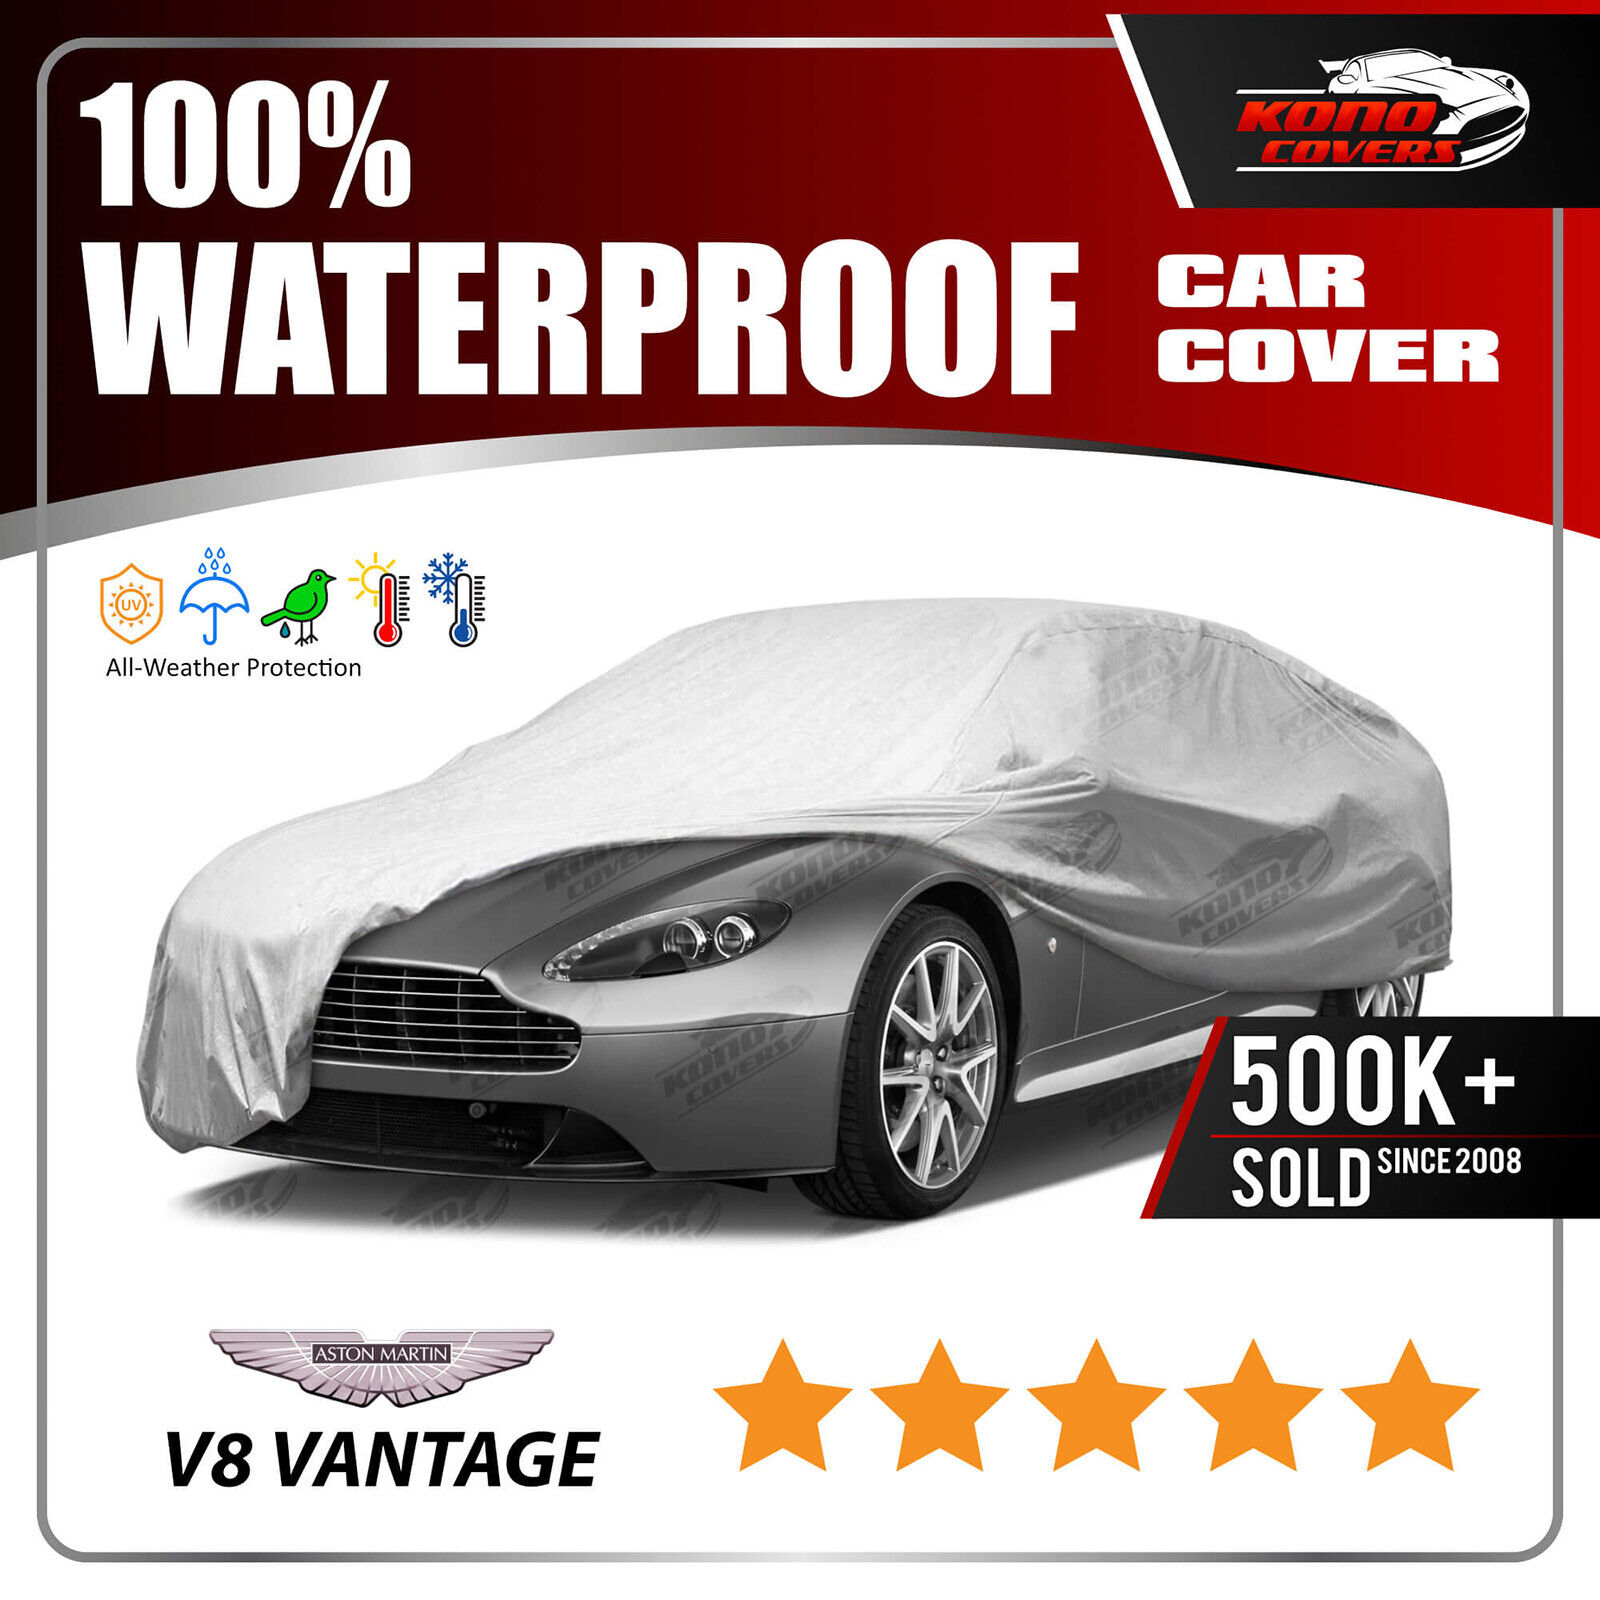 ASTON MARTIN V8 VANTAGE 2005-2016 CAR COVER - 100% Waterproof 100% Breathable